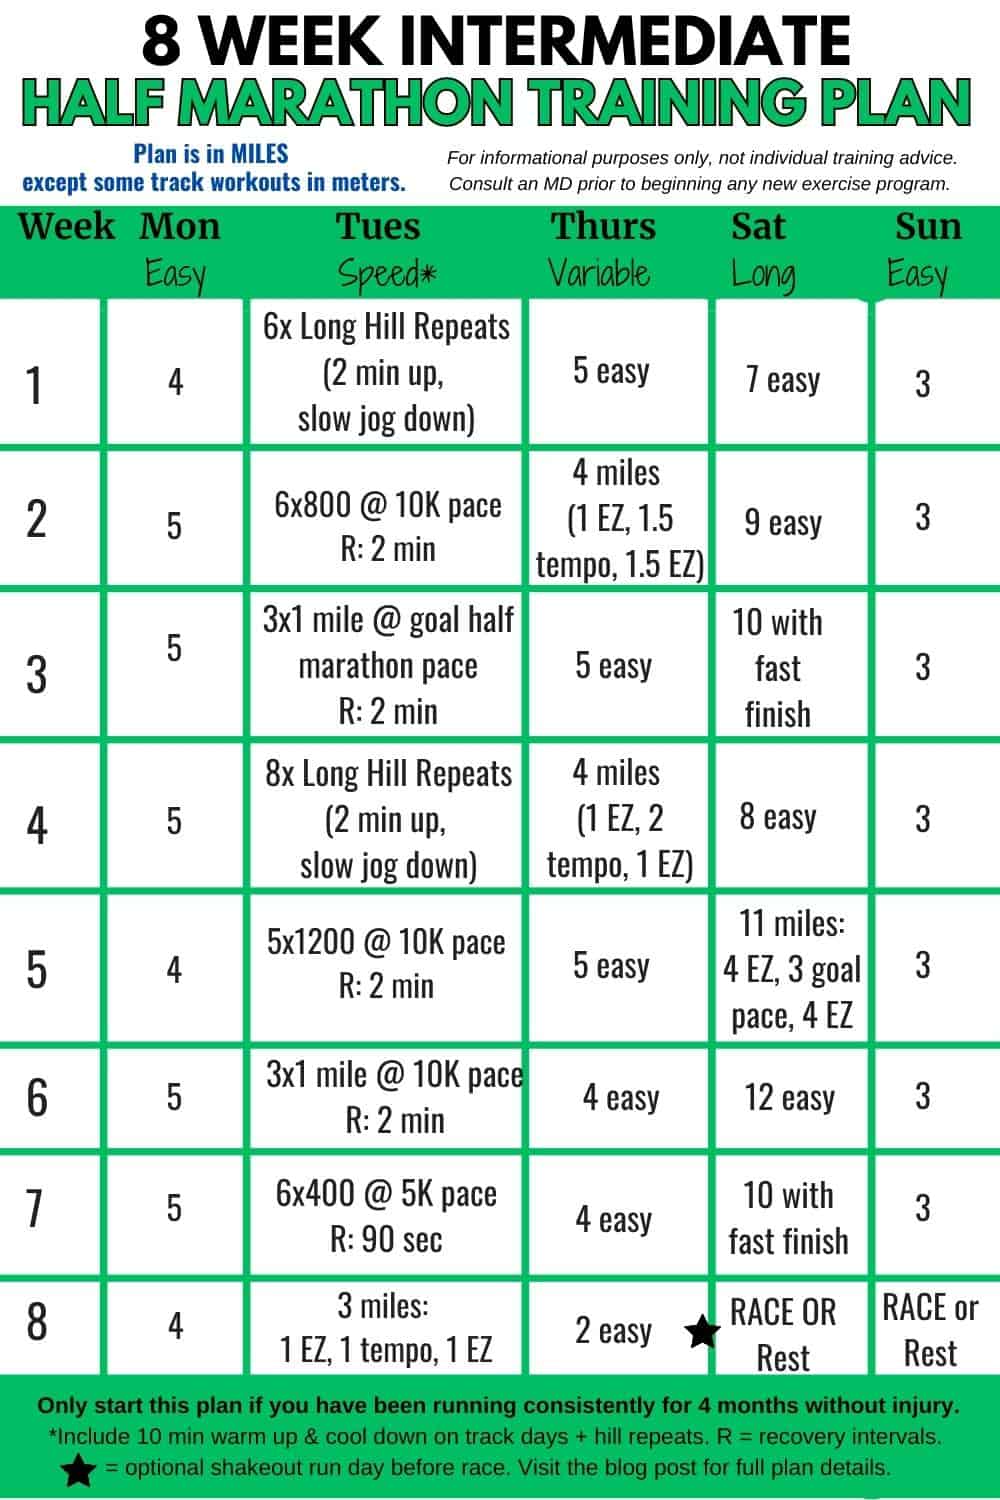 An intermediate half marathon training plan in table form.